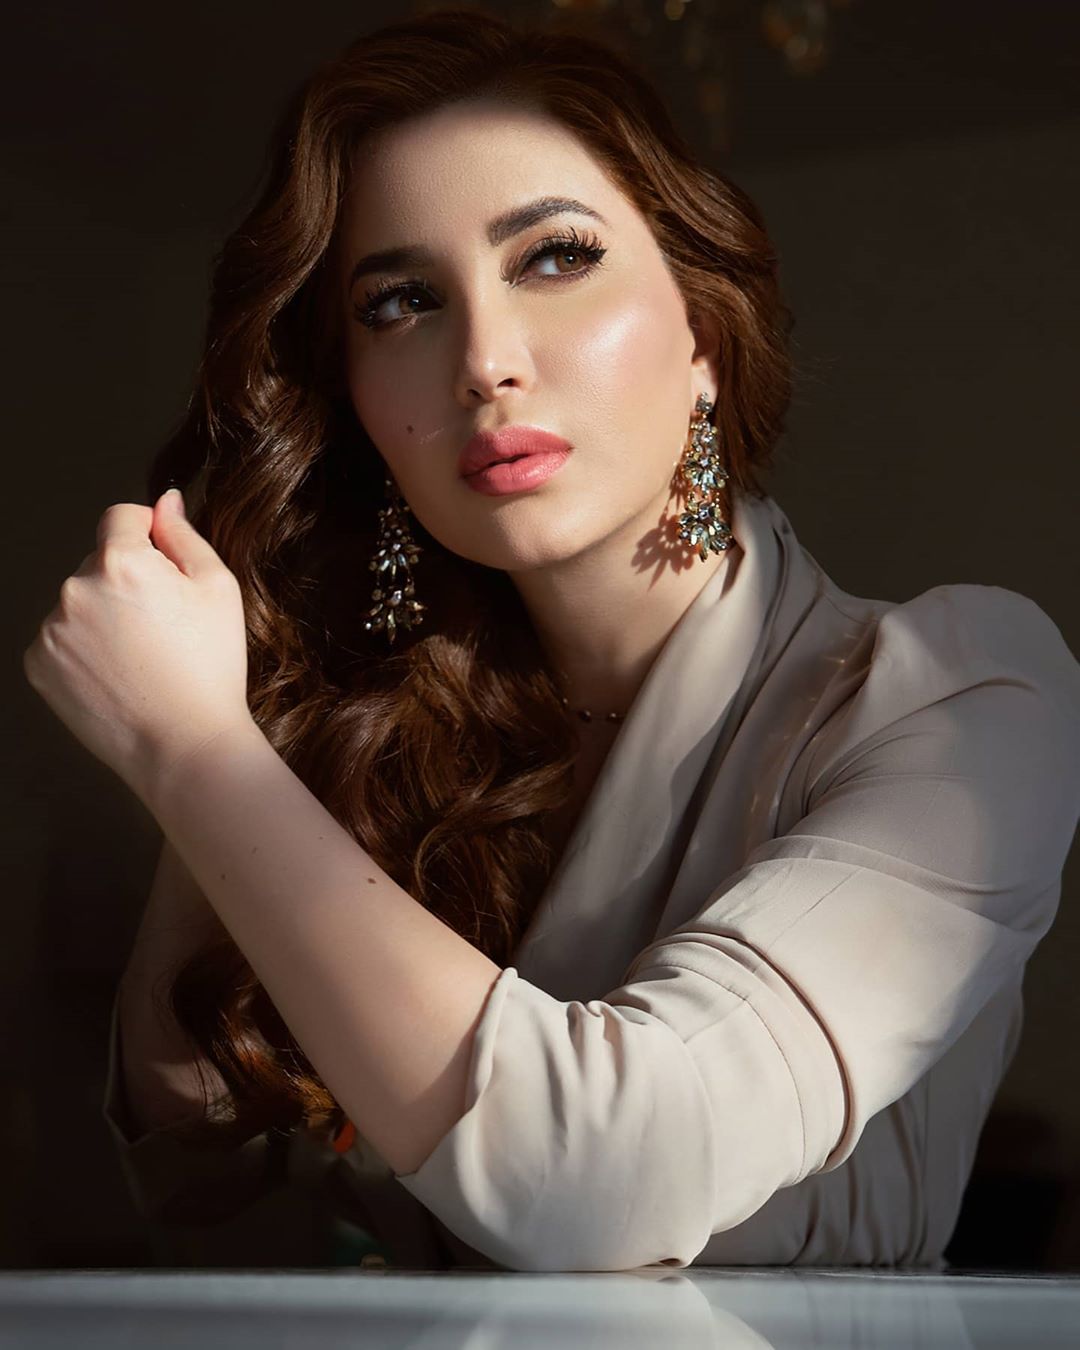 Nesreen Tafesh